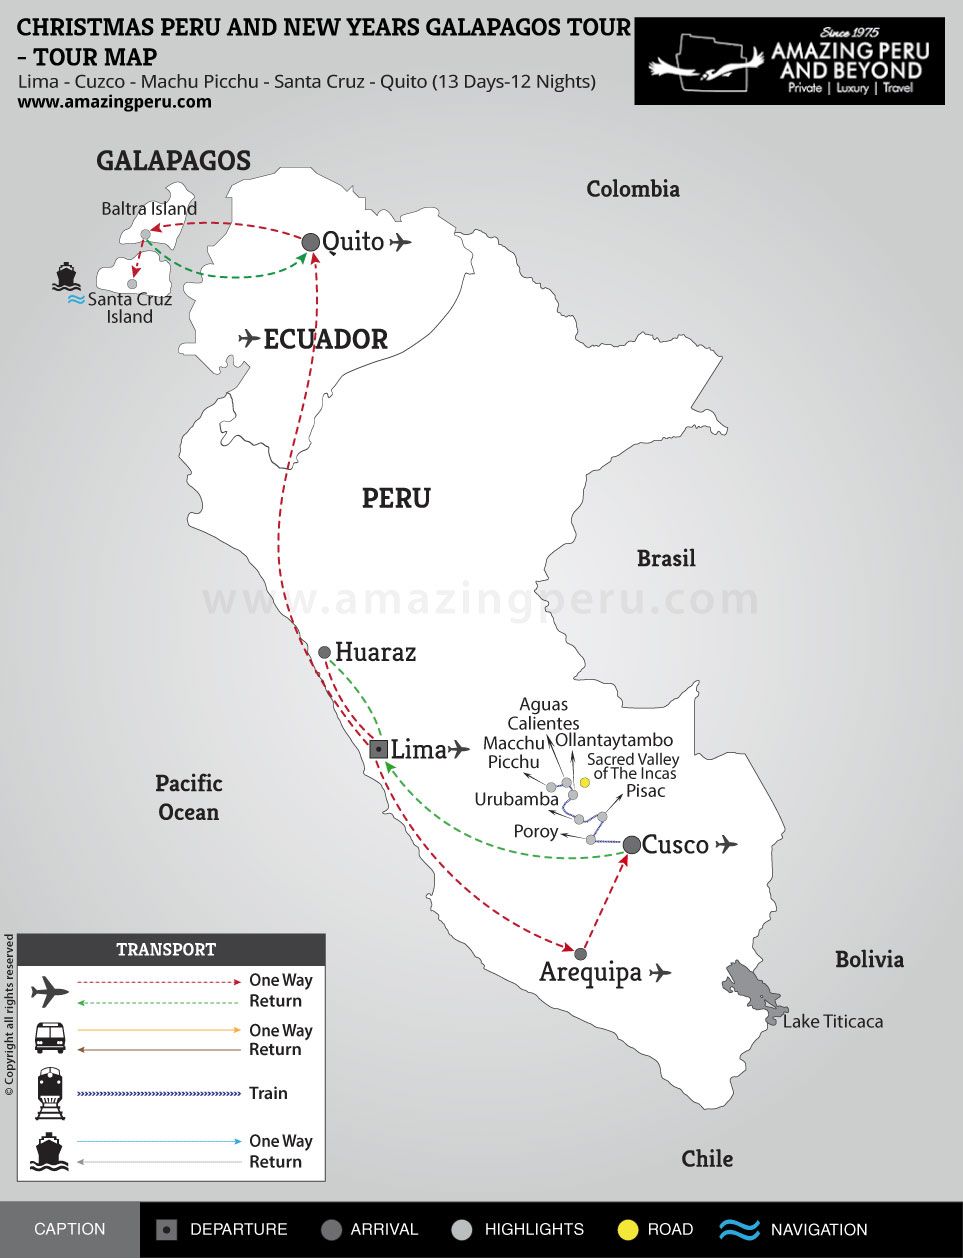 2022 Christmas Peru and New Years Galapagos Tour - 13 days / 12 nights.